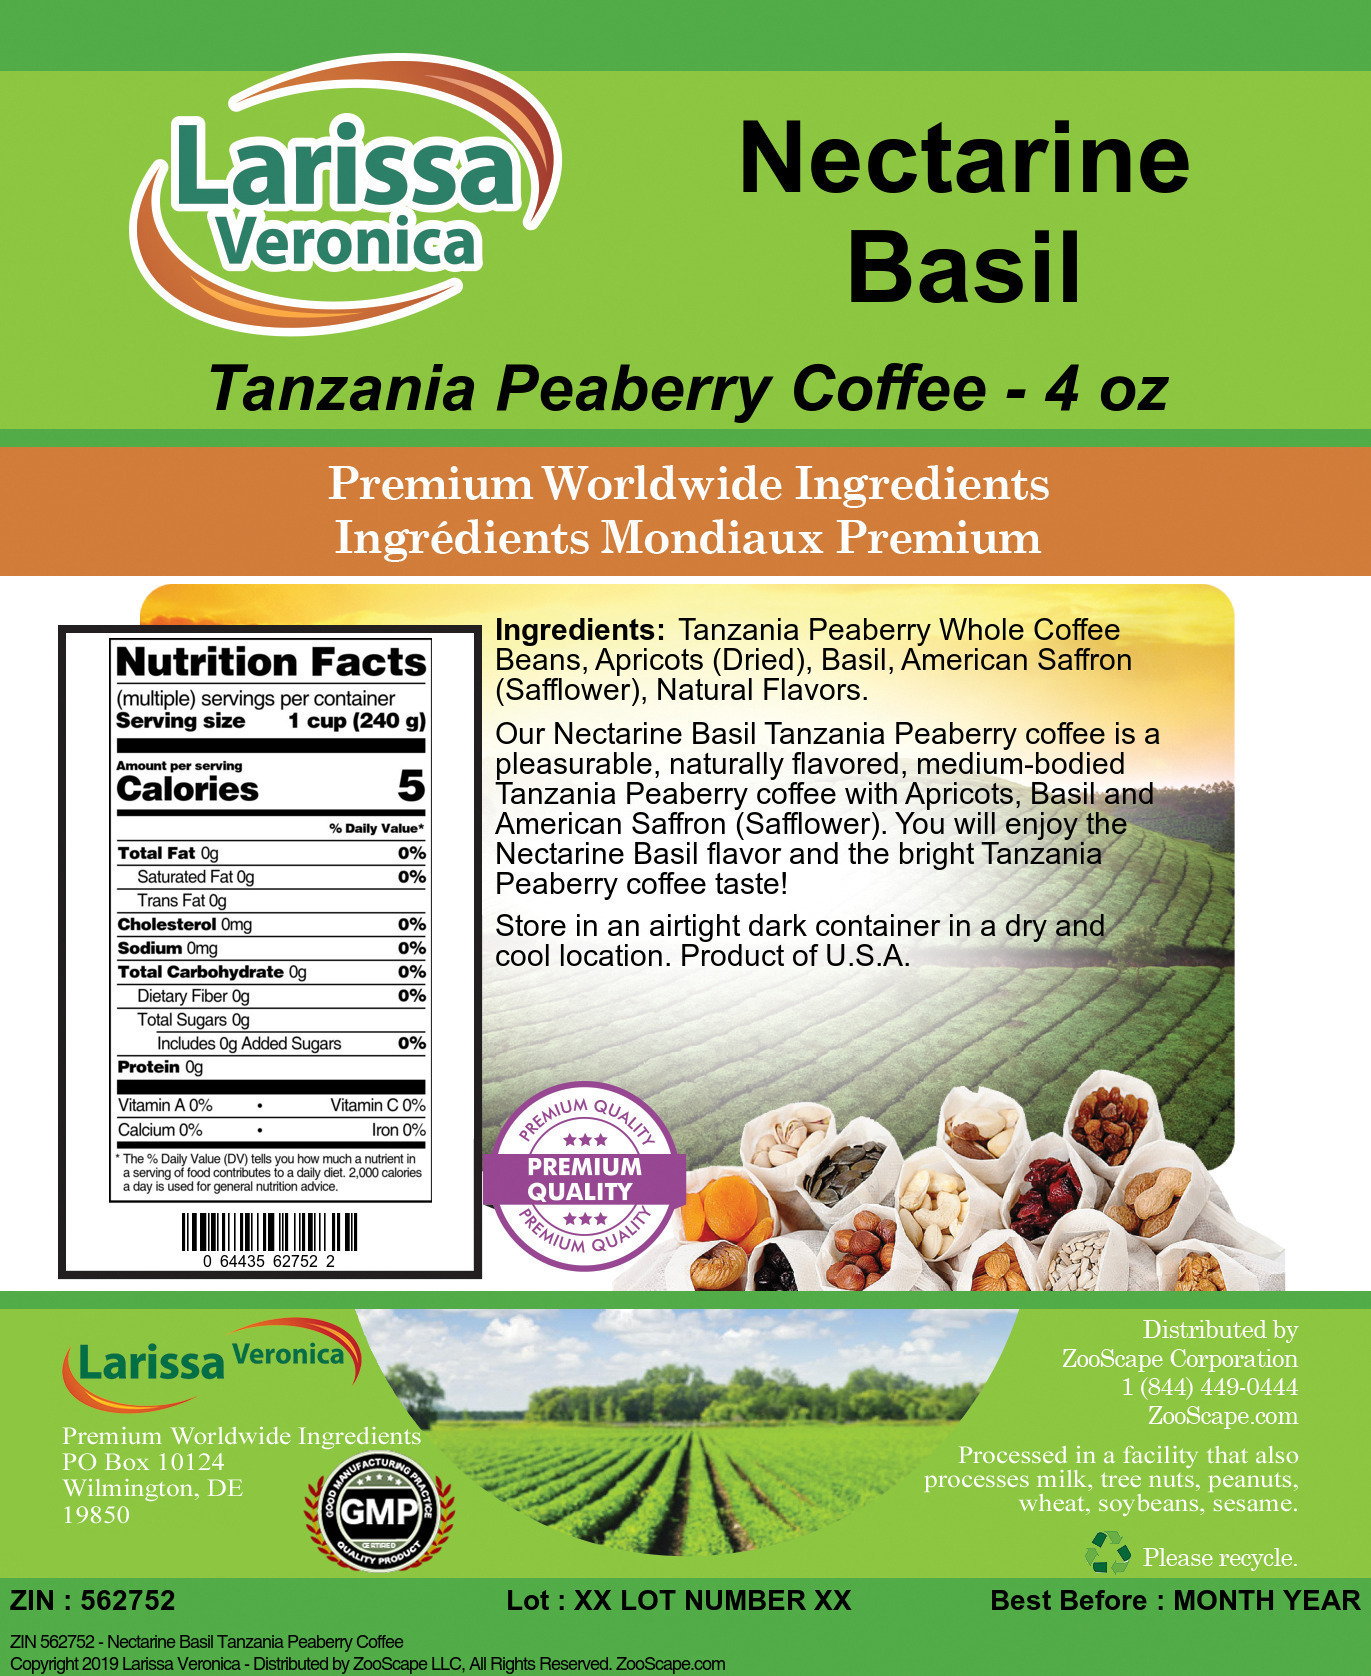 Nectarine Basil Tanzania Peaberry Coffee - Label